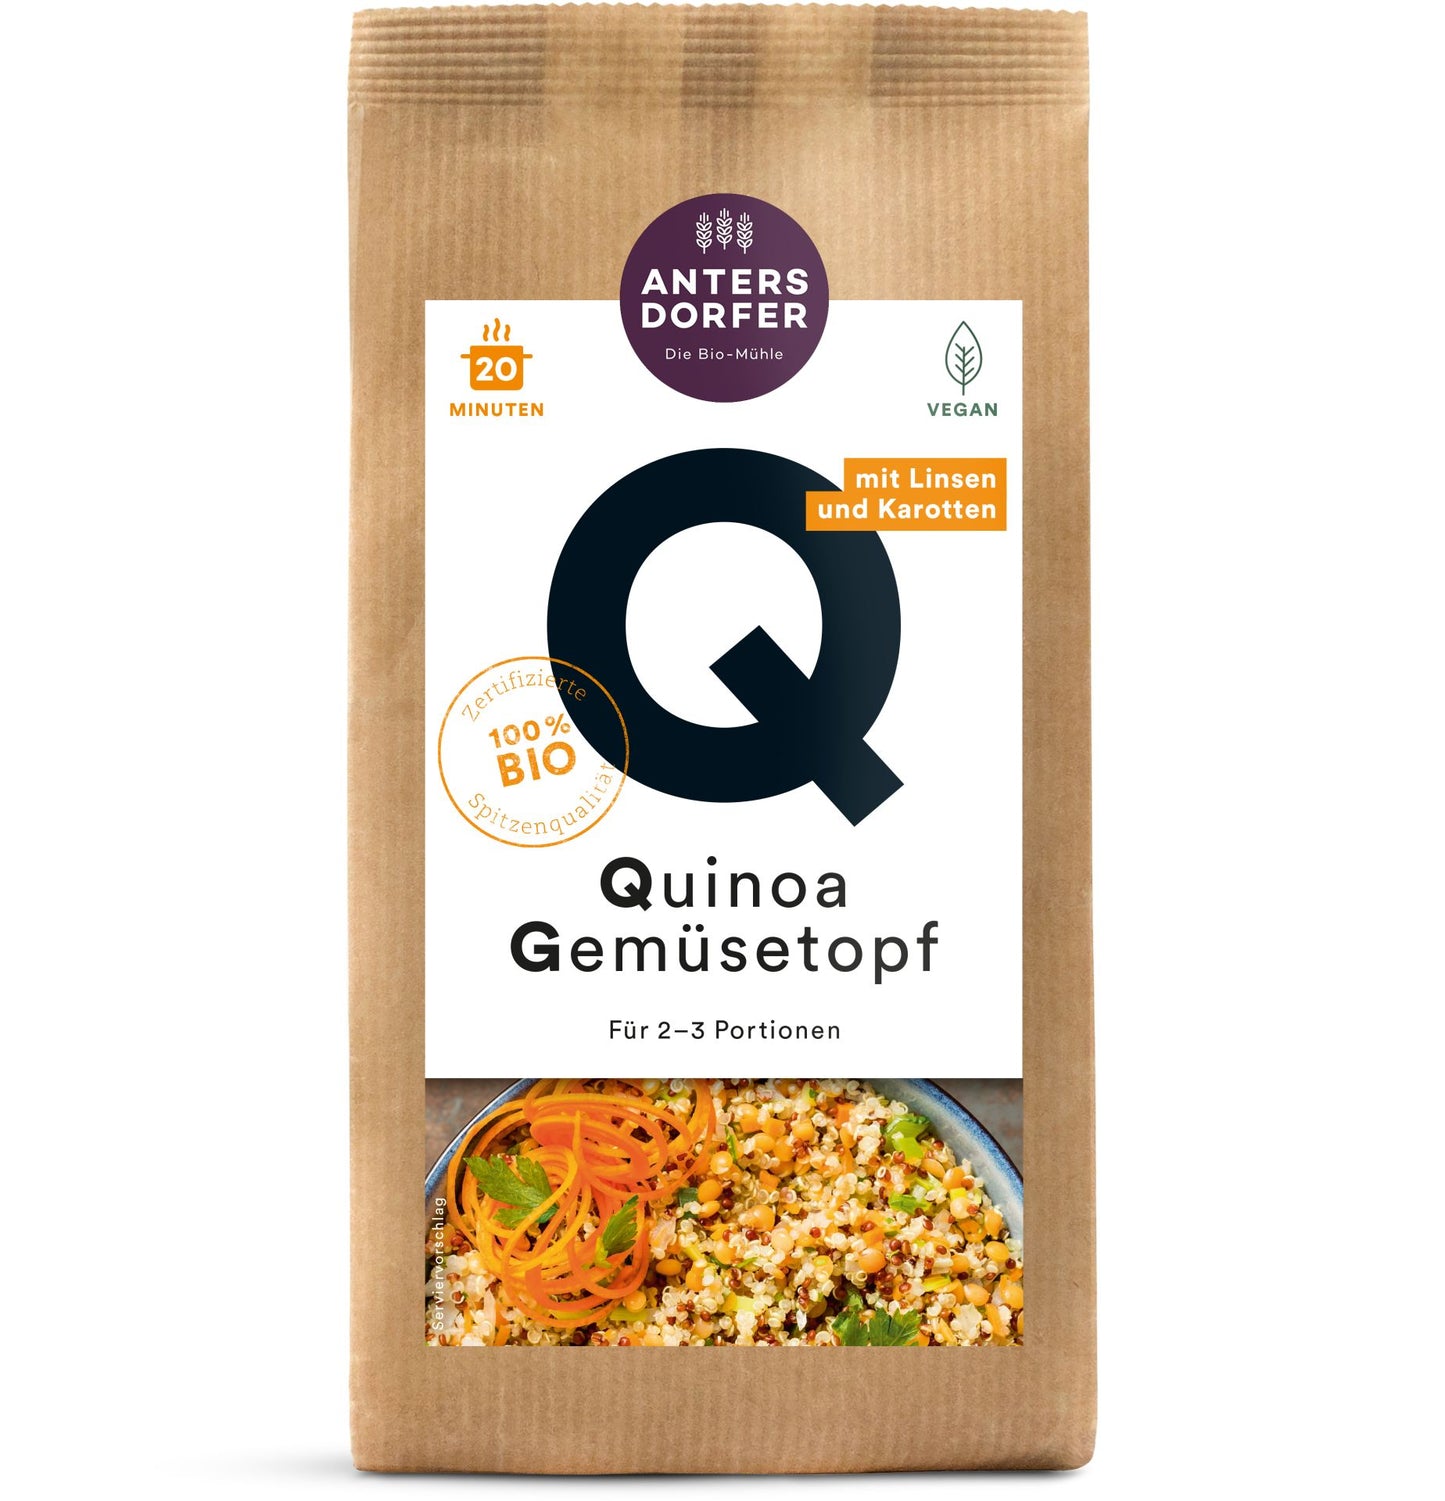 Antersdorfer Quinoa Gemüsetopf 150g